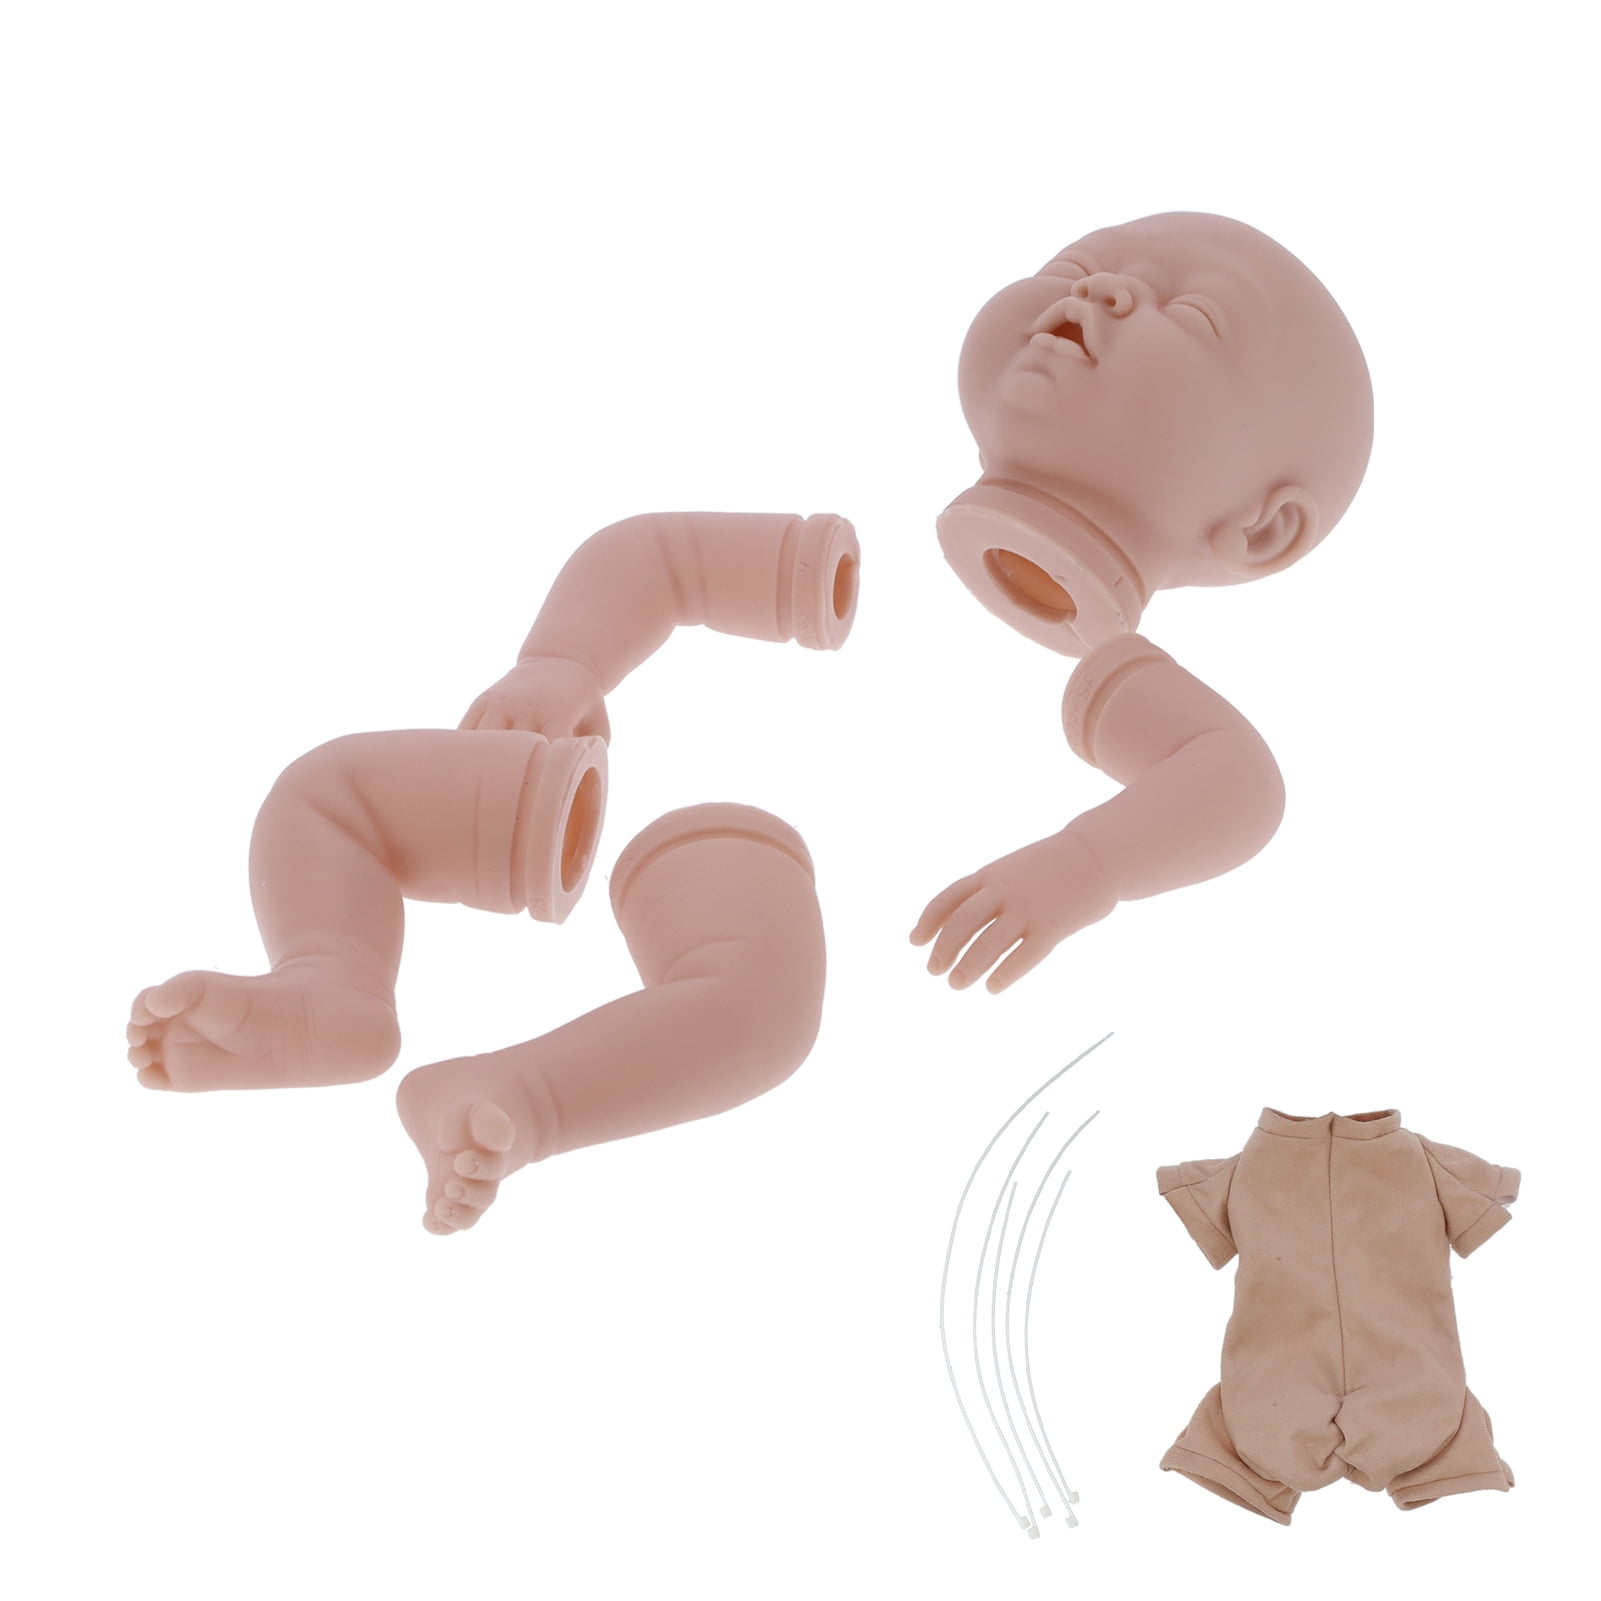 Reborn Doll Kits Unpainted Mold Head Arms Legs DK-50 Lifelike Soft Vinyl 20''